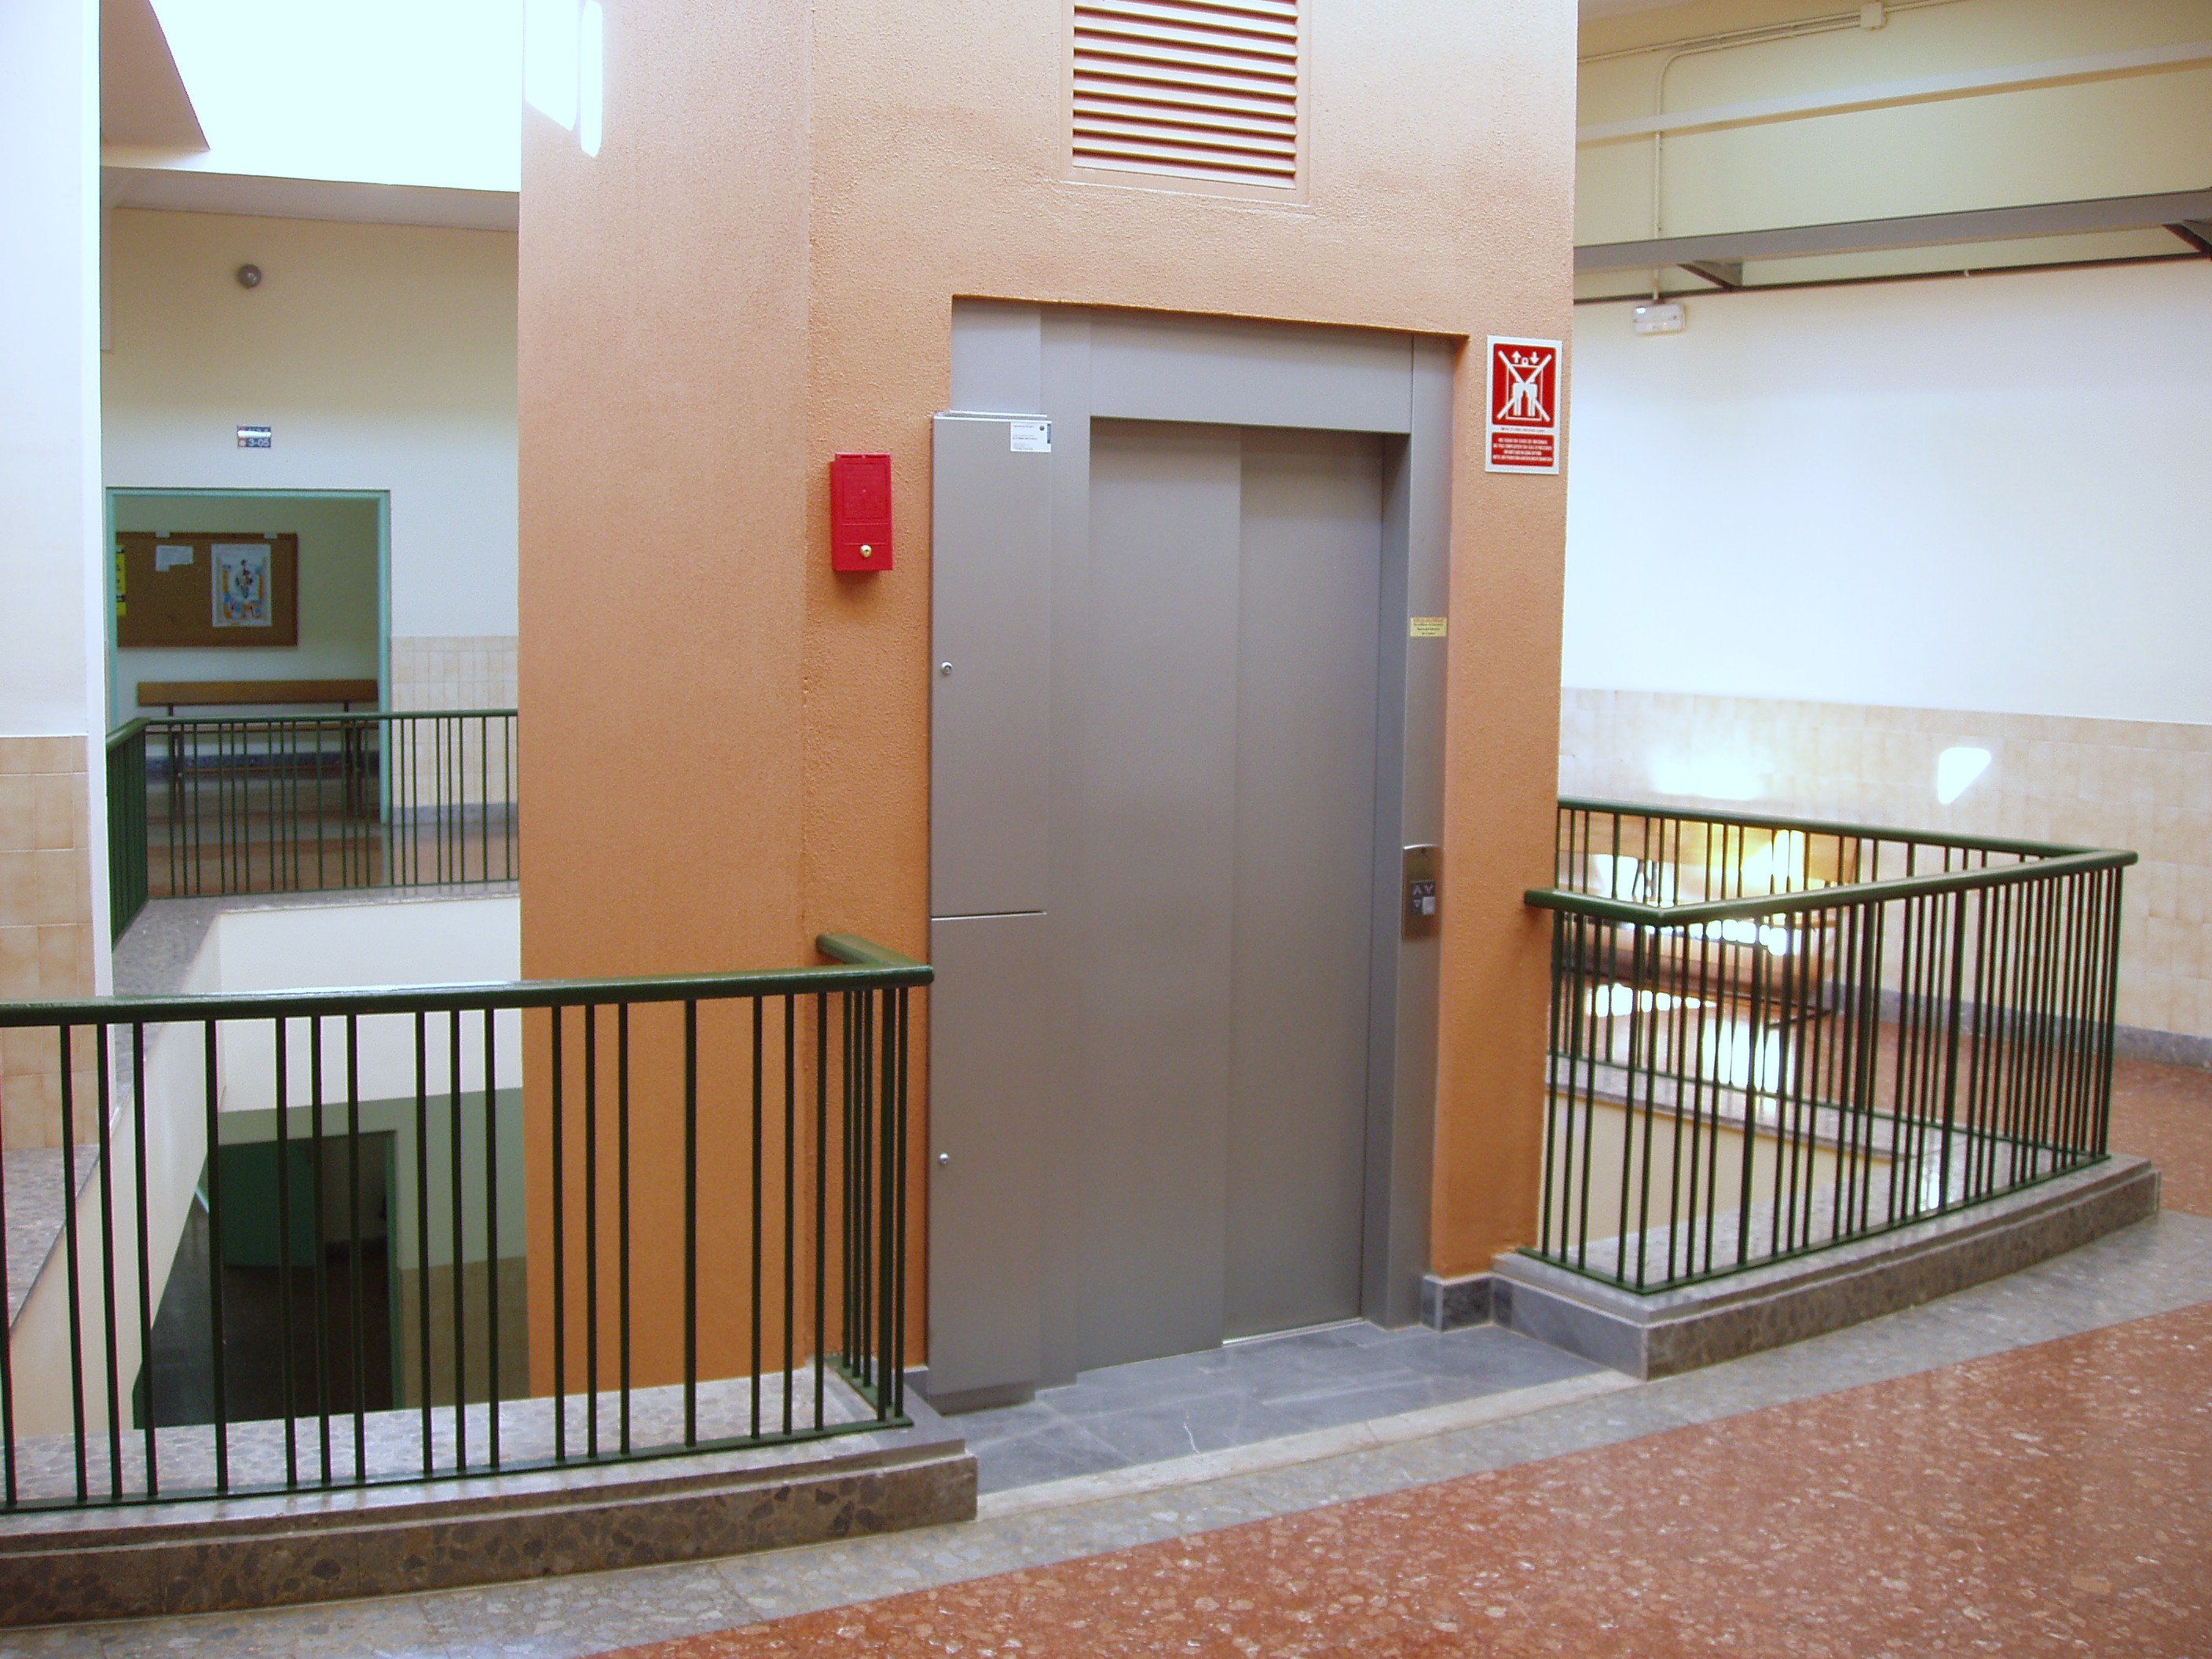 Cárcel por agredir sexualmente en ascensores de Barcelona a cuatro chicas